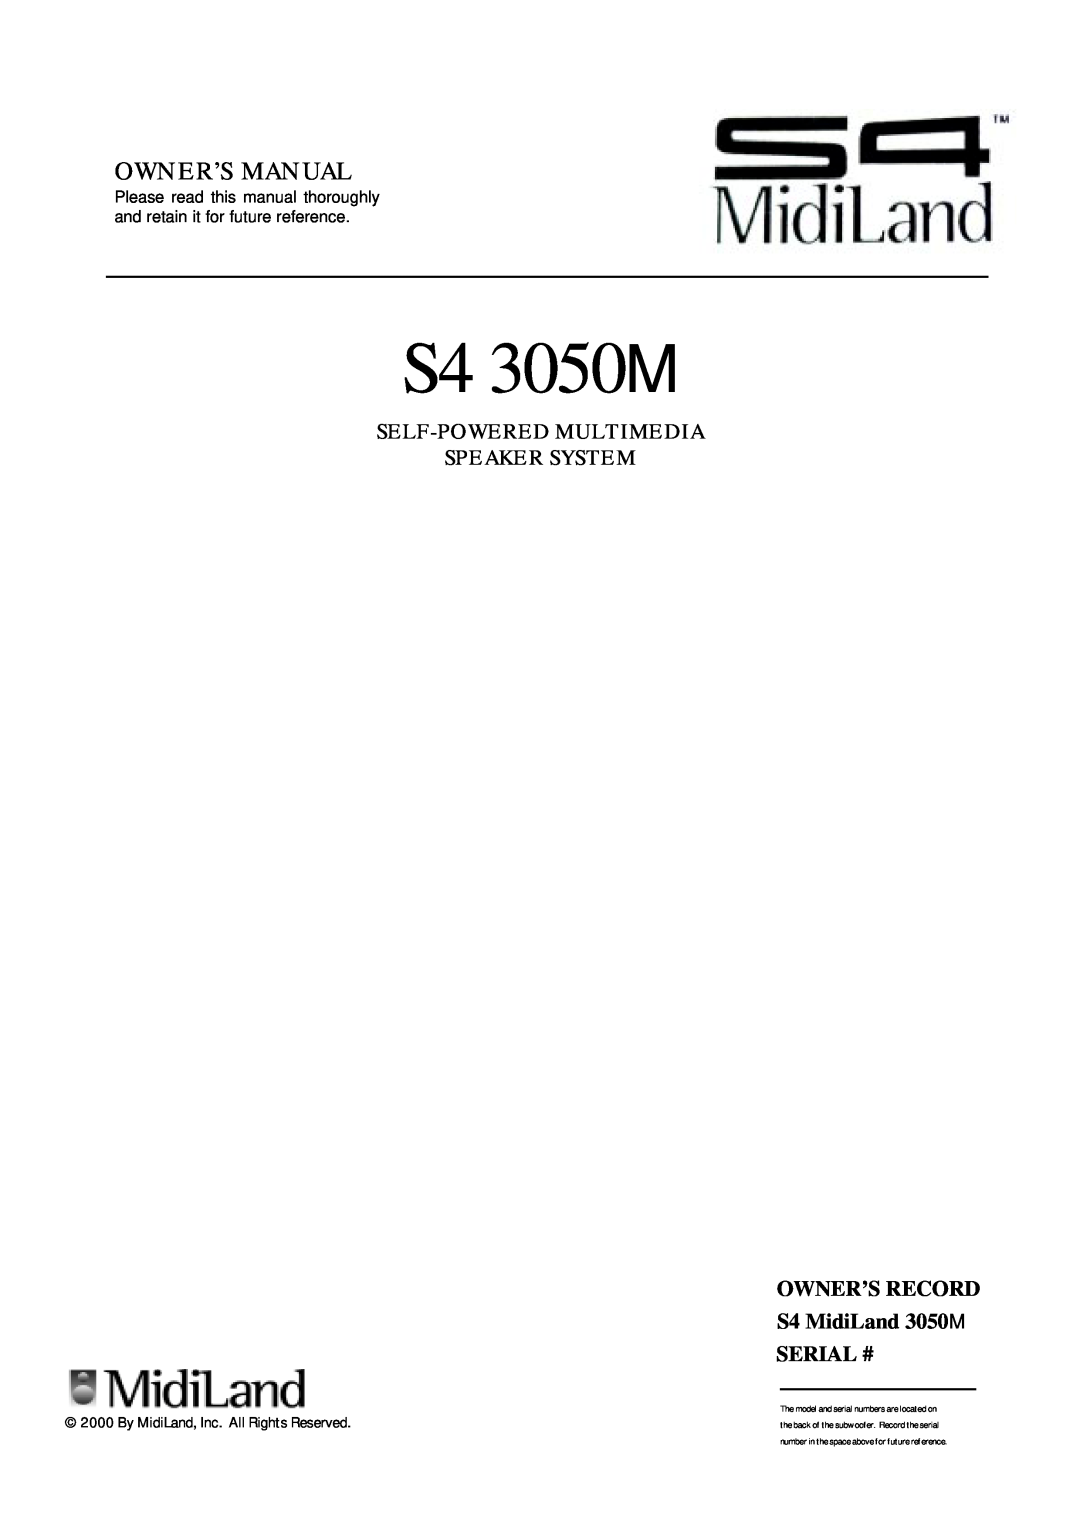 MidiLand S4 3050M owner manual Self-Poweredmultimedia Speaker System, OWNER’S RECORD S4 MidiLand 3050M SERIAL # 